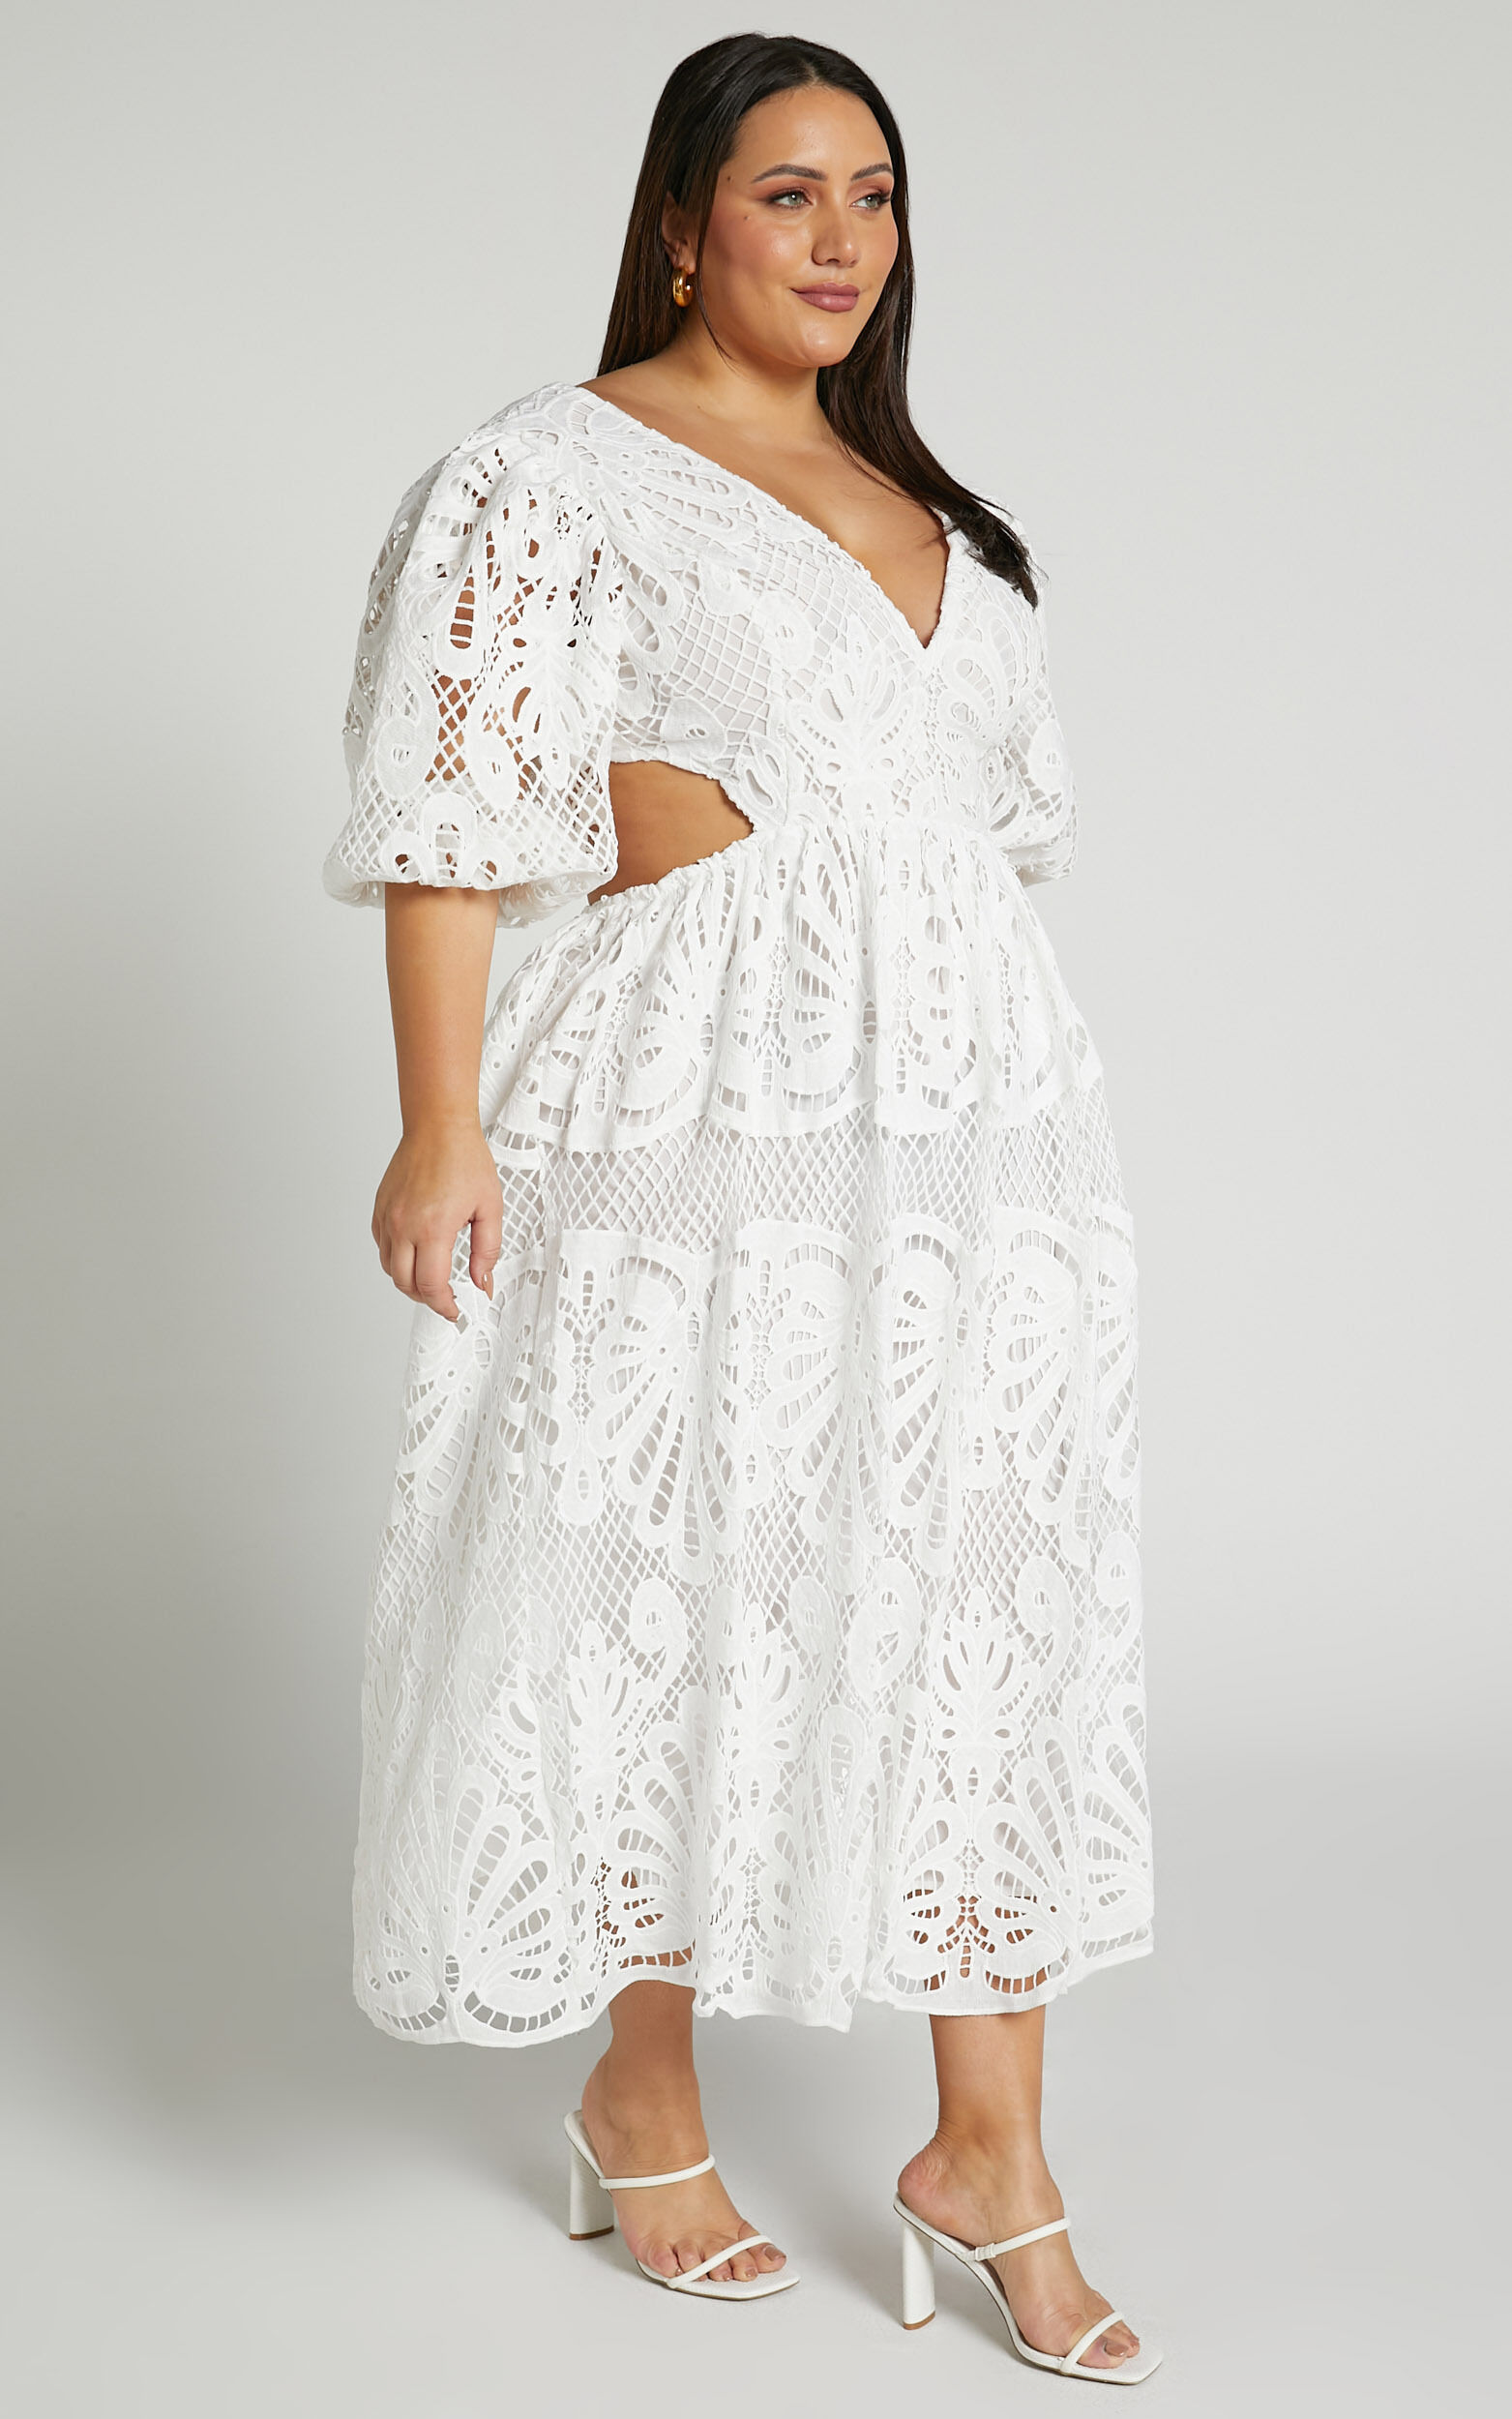 Anieshaya Midi Dress - V Neck Cut Out Lace Dress in White | Showpo USA